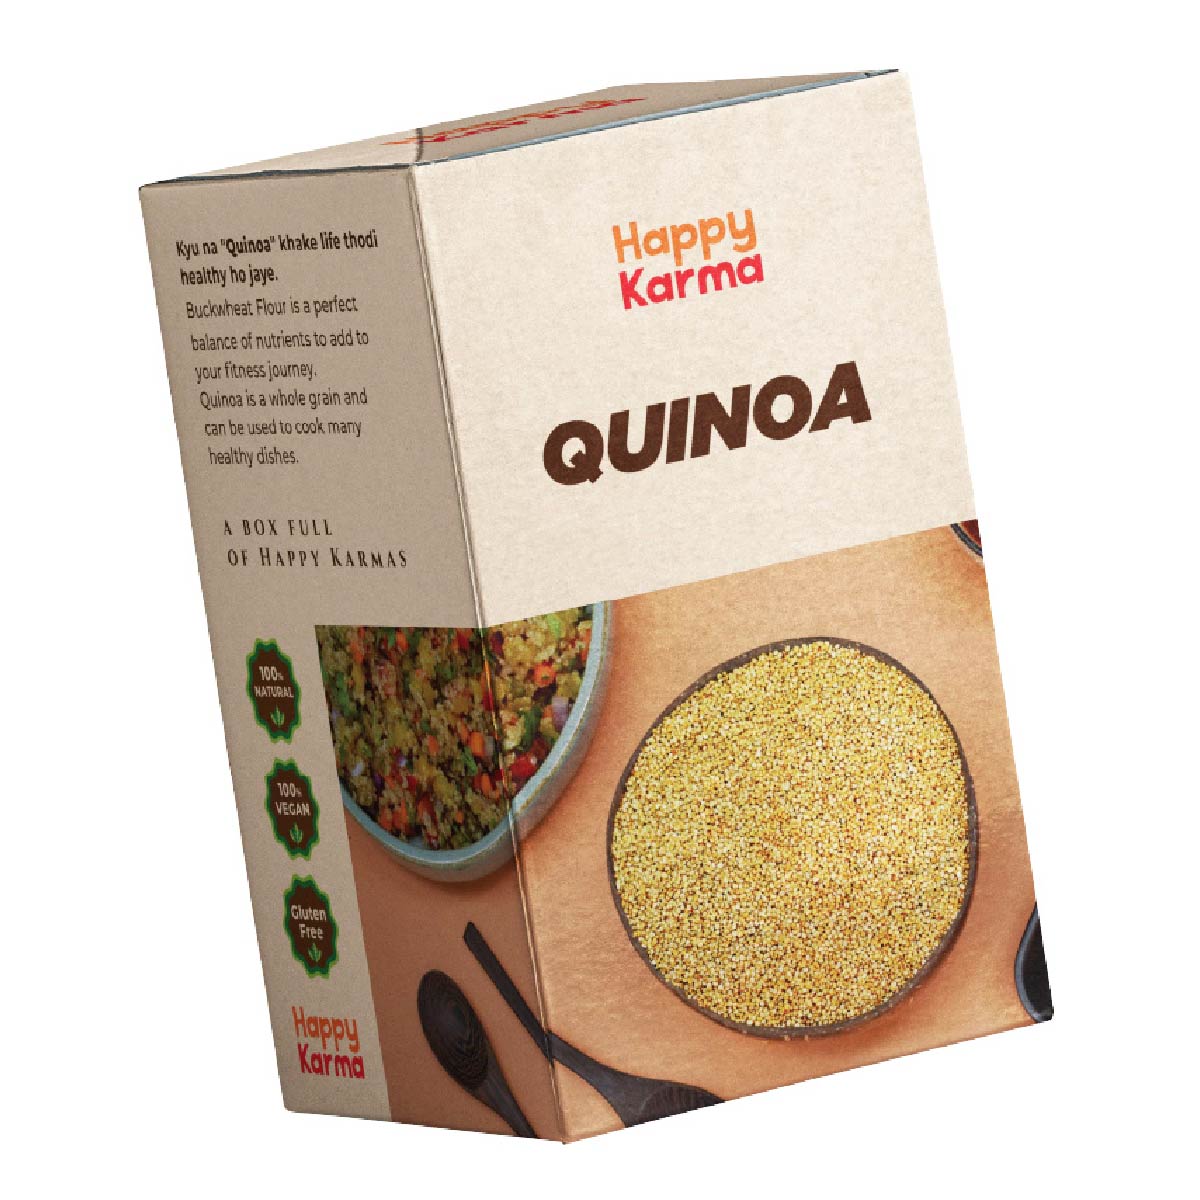 Quinoa Grains 900g | Diet food | Gluten Free | High Fibre | Organic and Nutritious Food